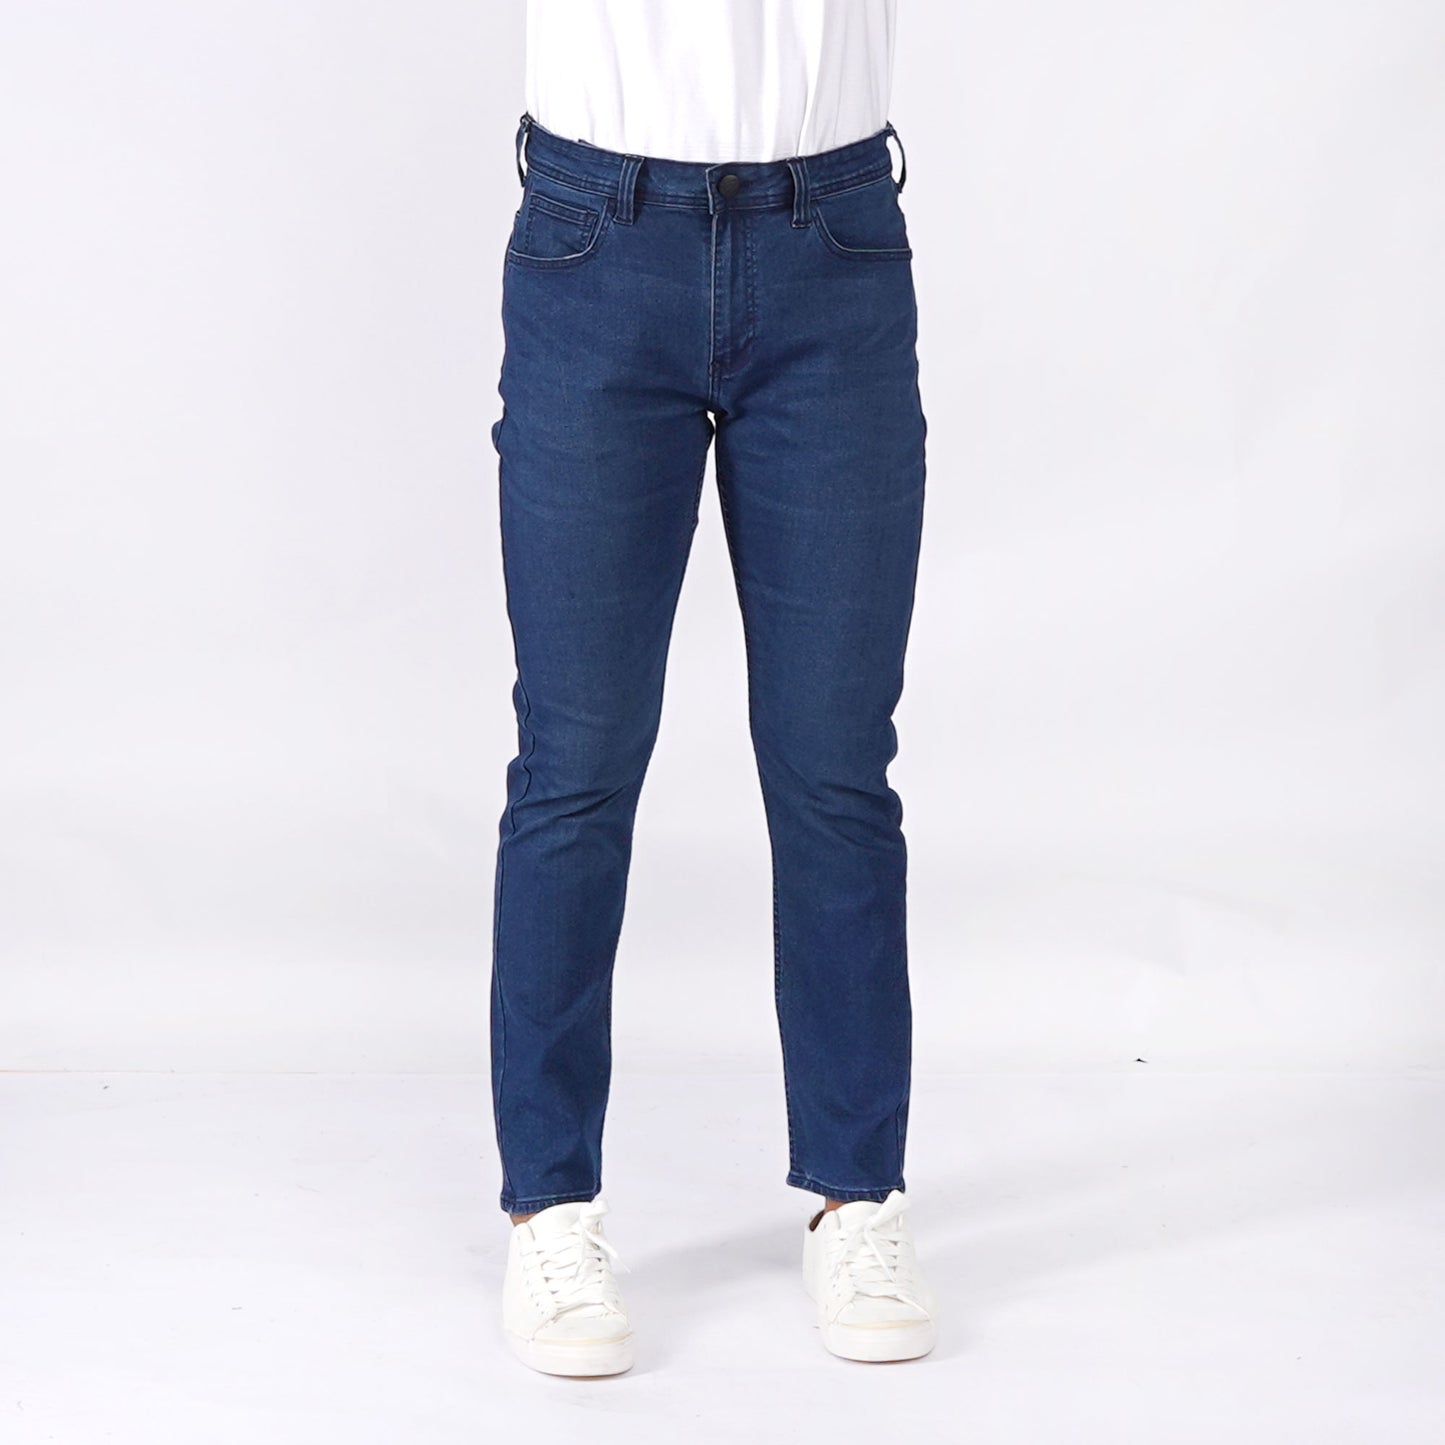 Petrol Basic Denim Pants for Men Skin Tight Fitting Mid Rise Trendy fashion Casual Bottoms Dark Shade Jeans for Men 149858-U (Dark Shade)